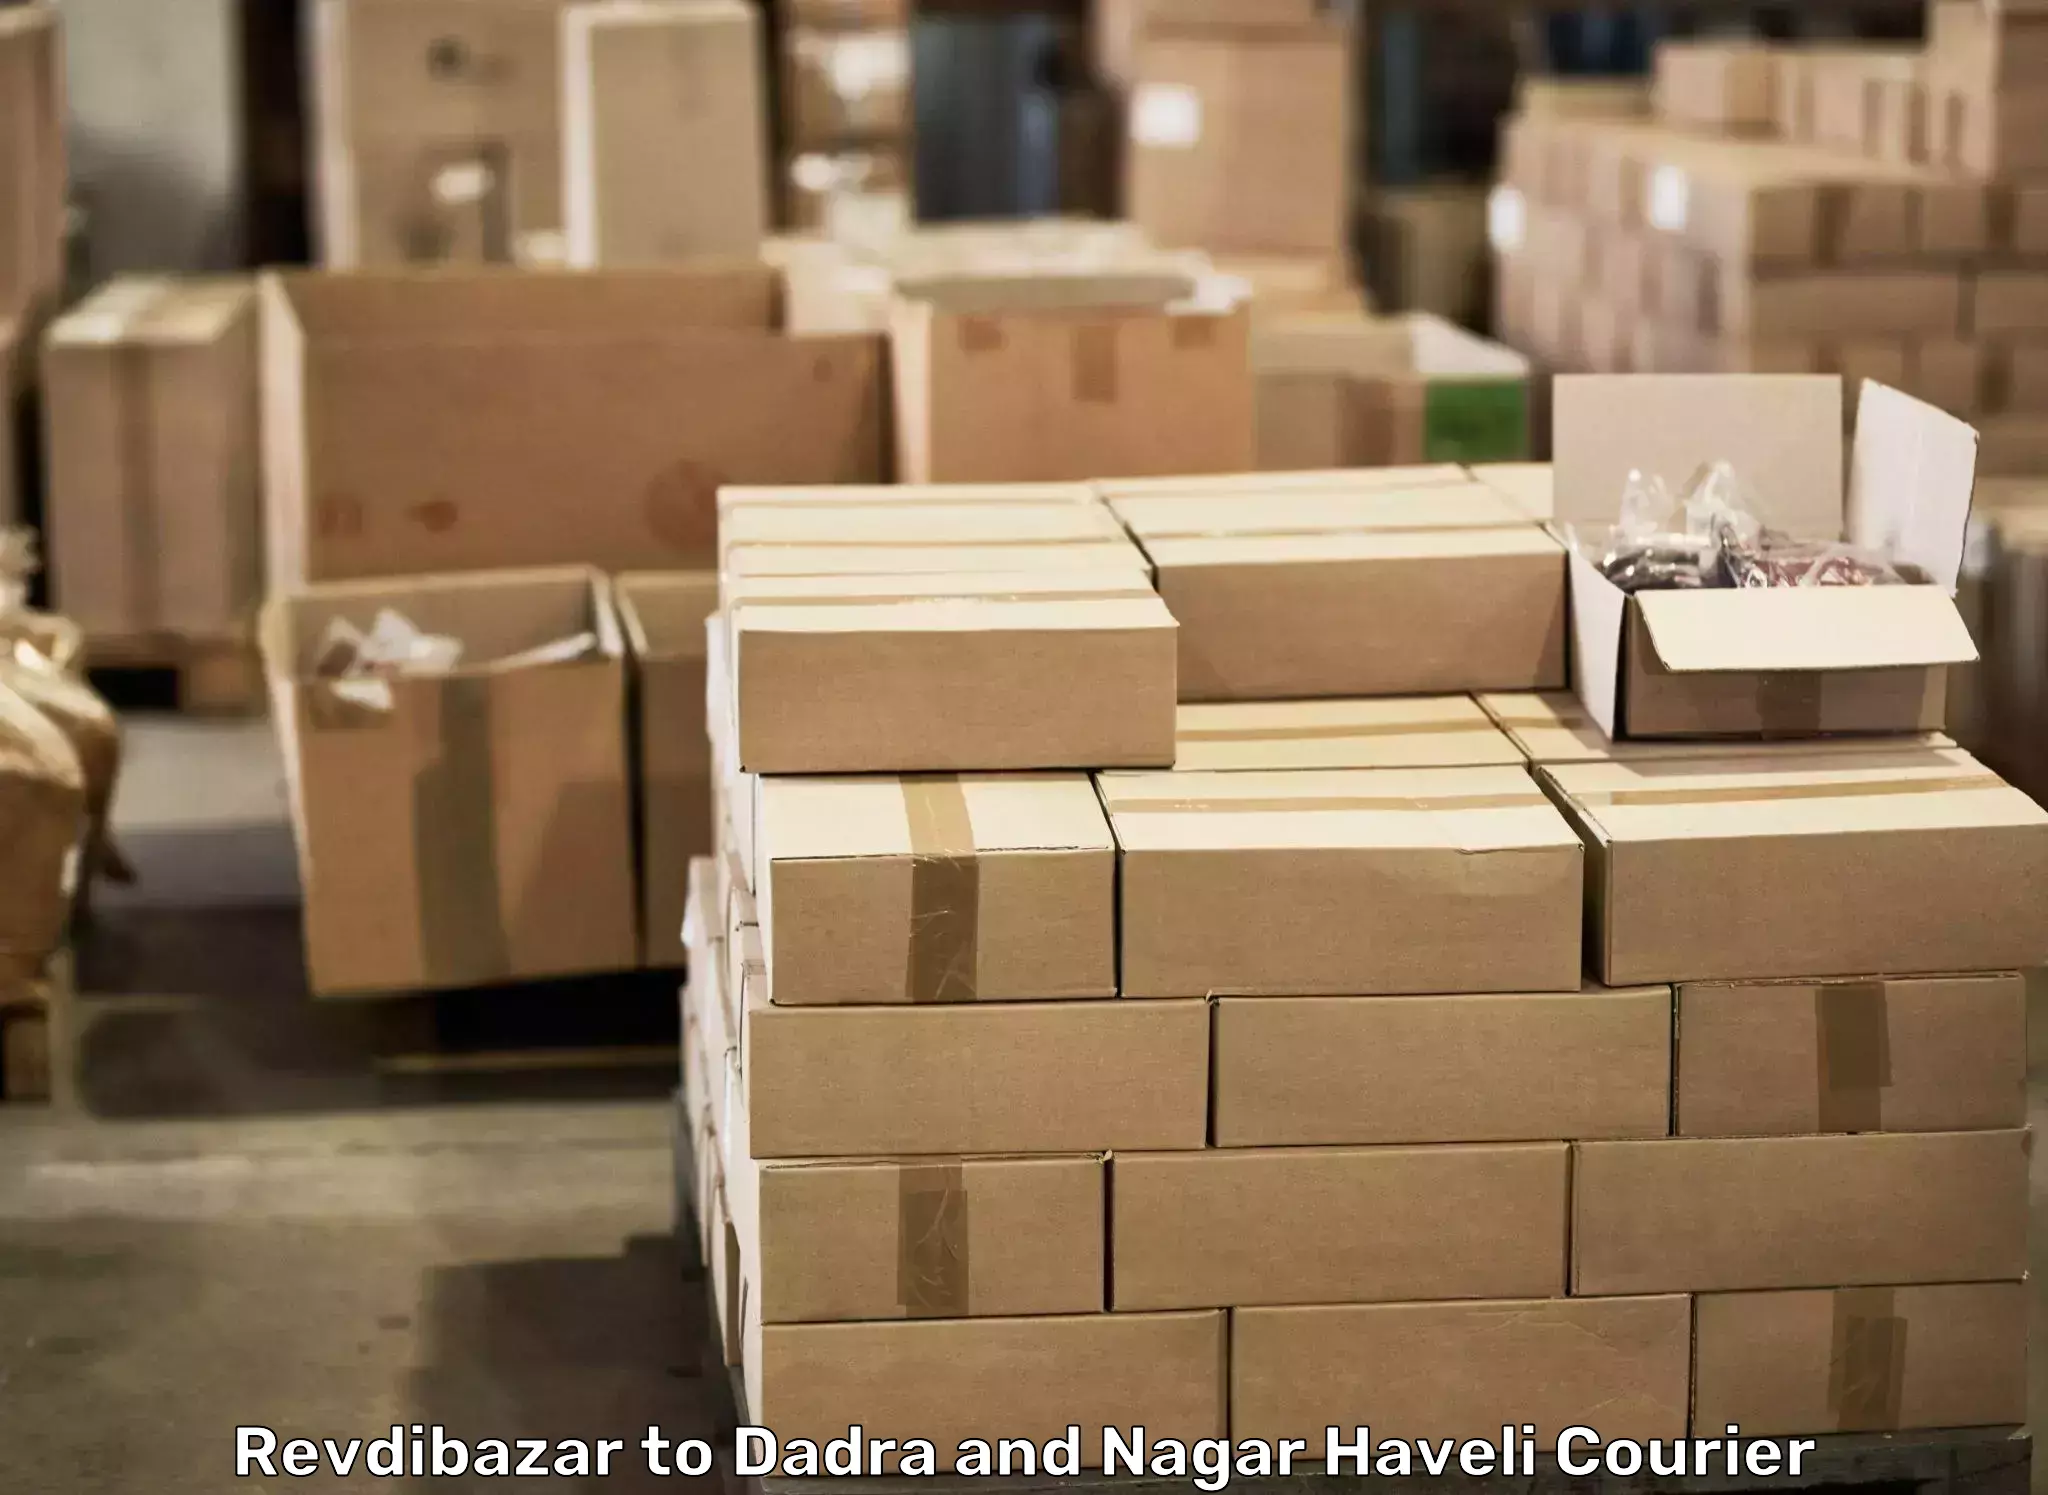 High-quality moving services Revdibazar to Dadra and Nagar Haveli